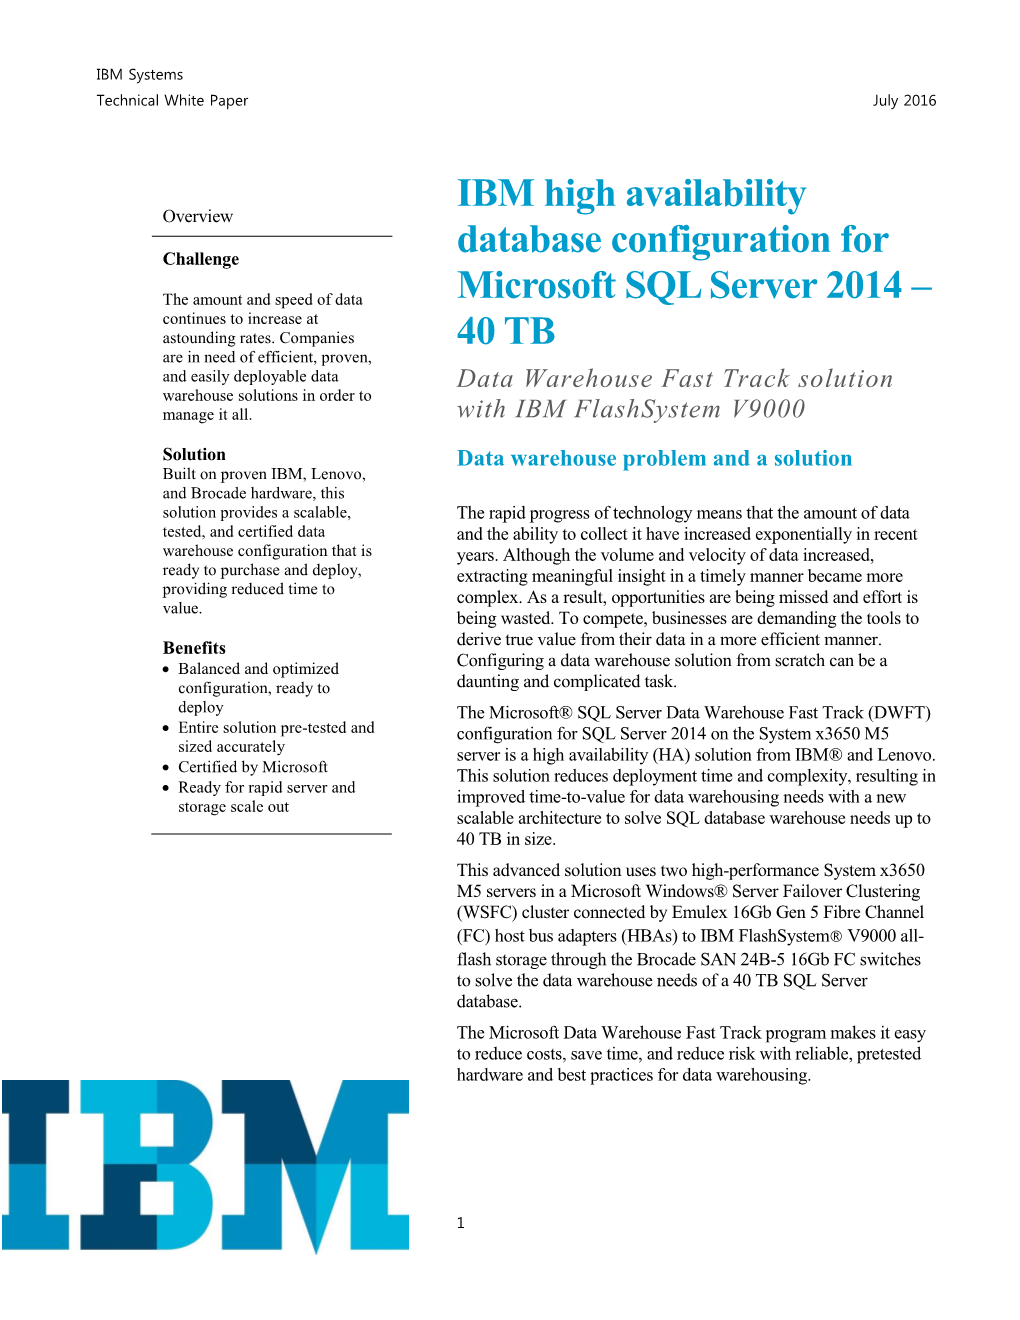 IBM High Availability Database Configuration for Microsoft SQL Server 2014